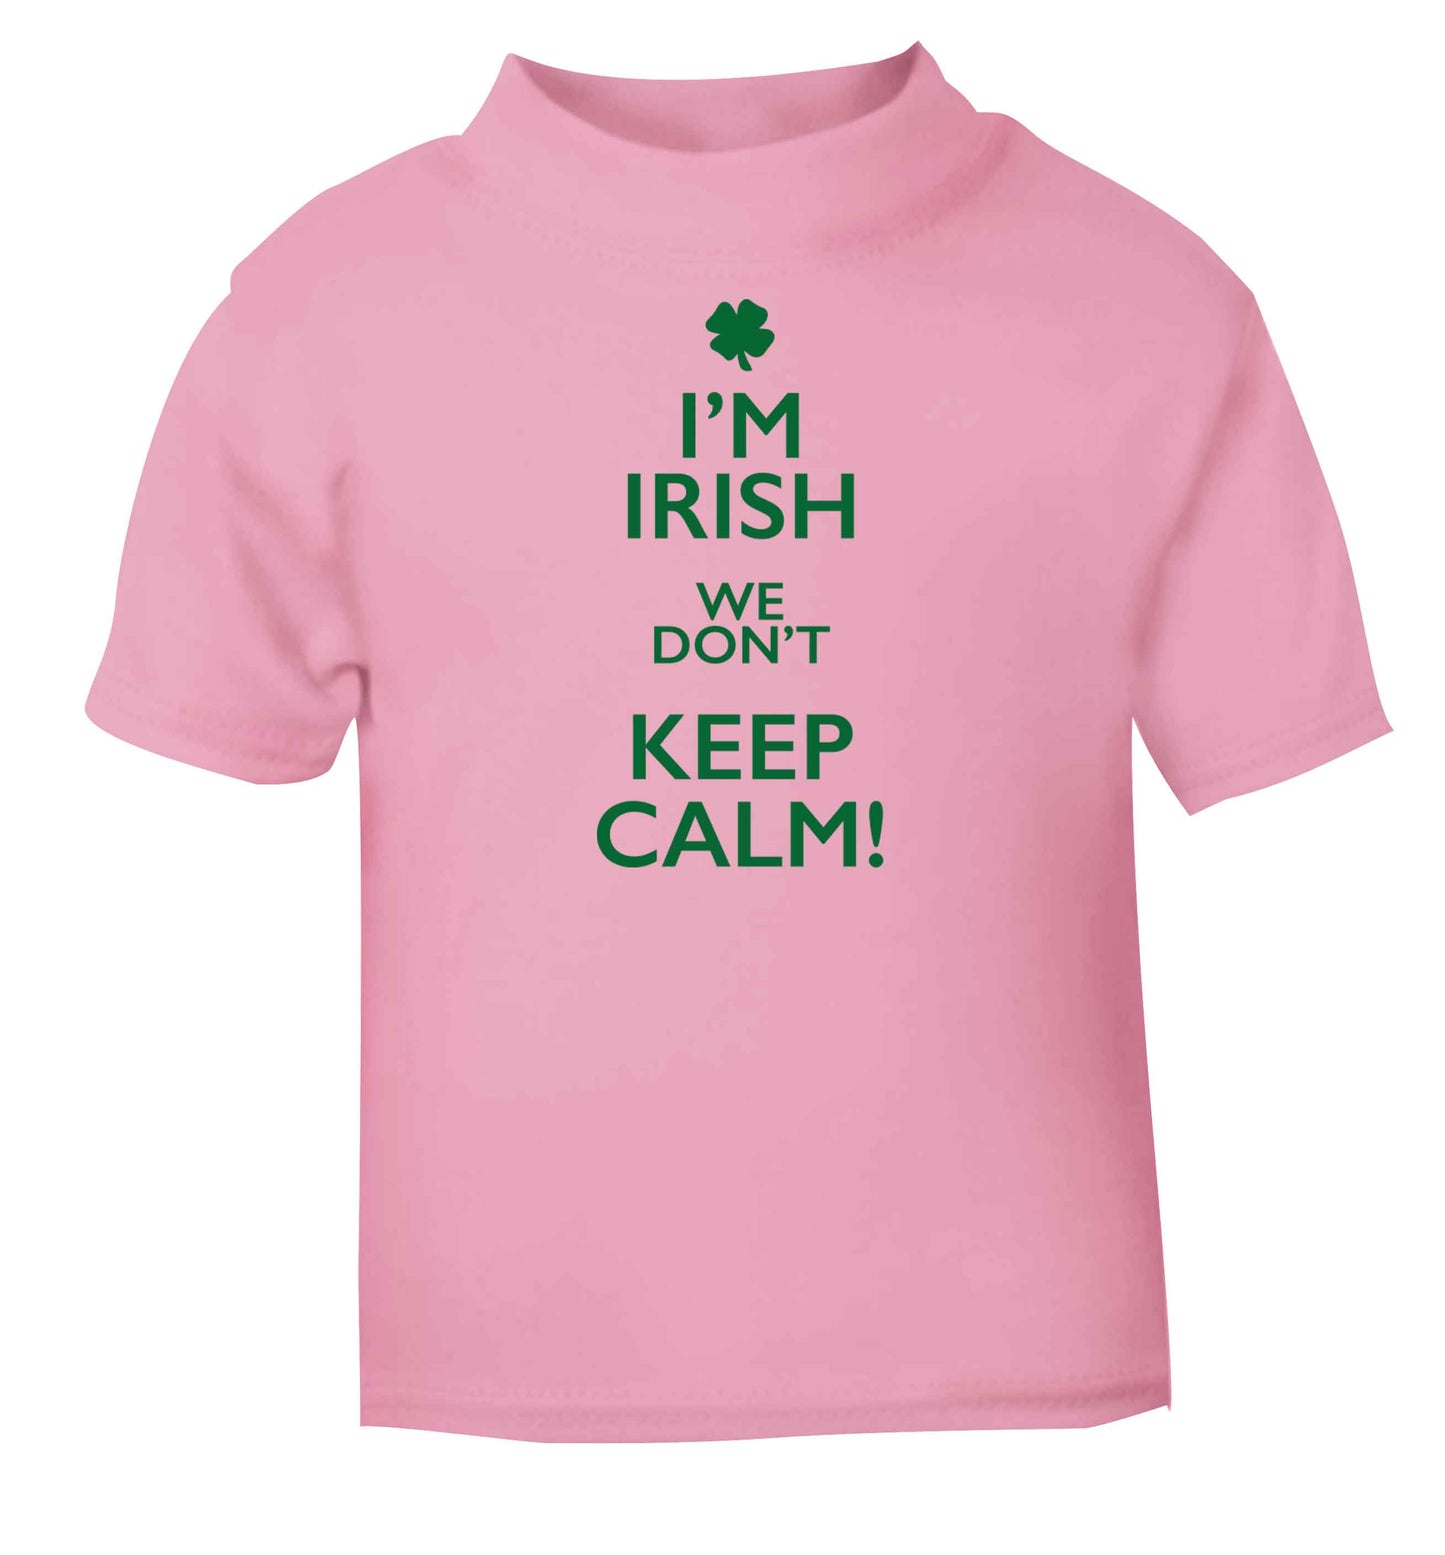 I'm Irish we don't keep calm light pink baby toddler Tshirt 2 Years